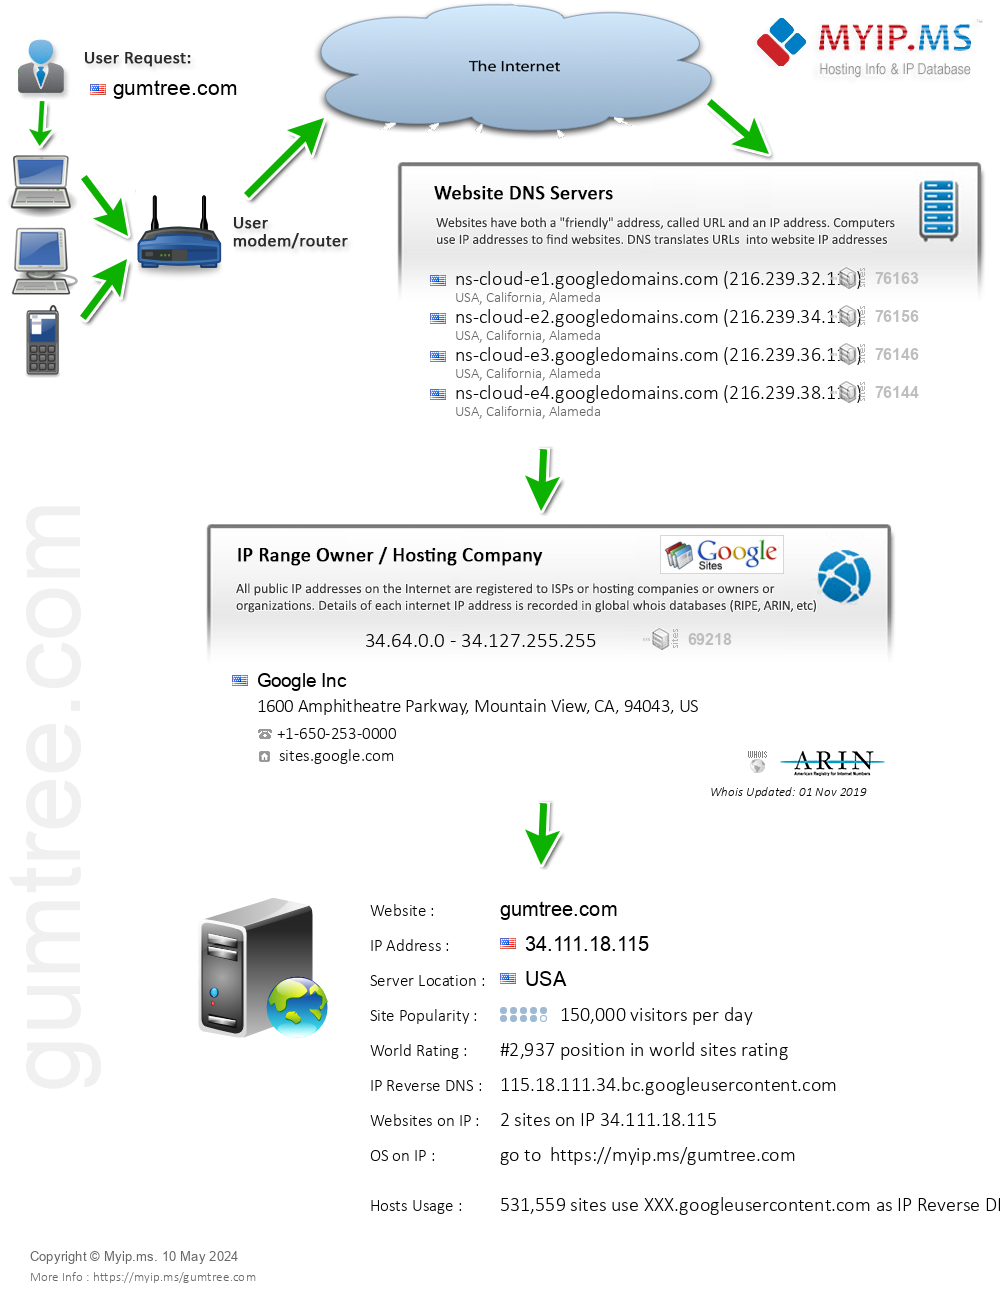 Gumtree.com - Website Hosting Visual IP Diagram